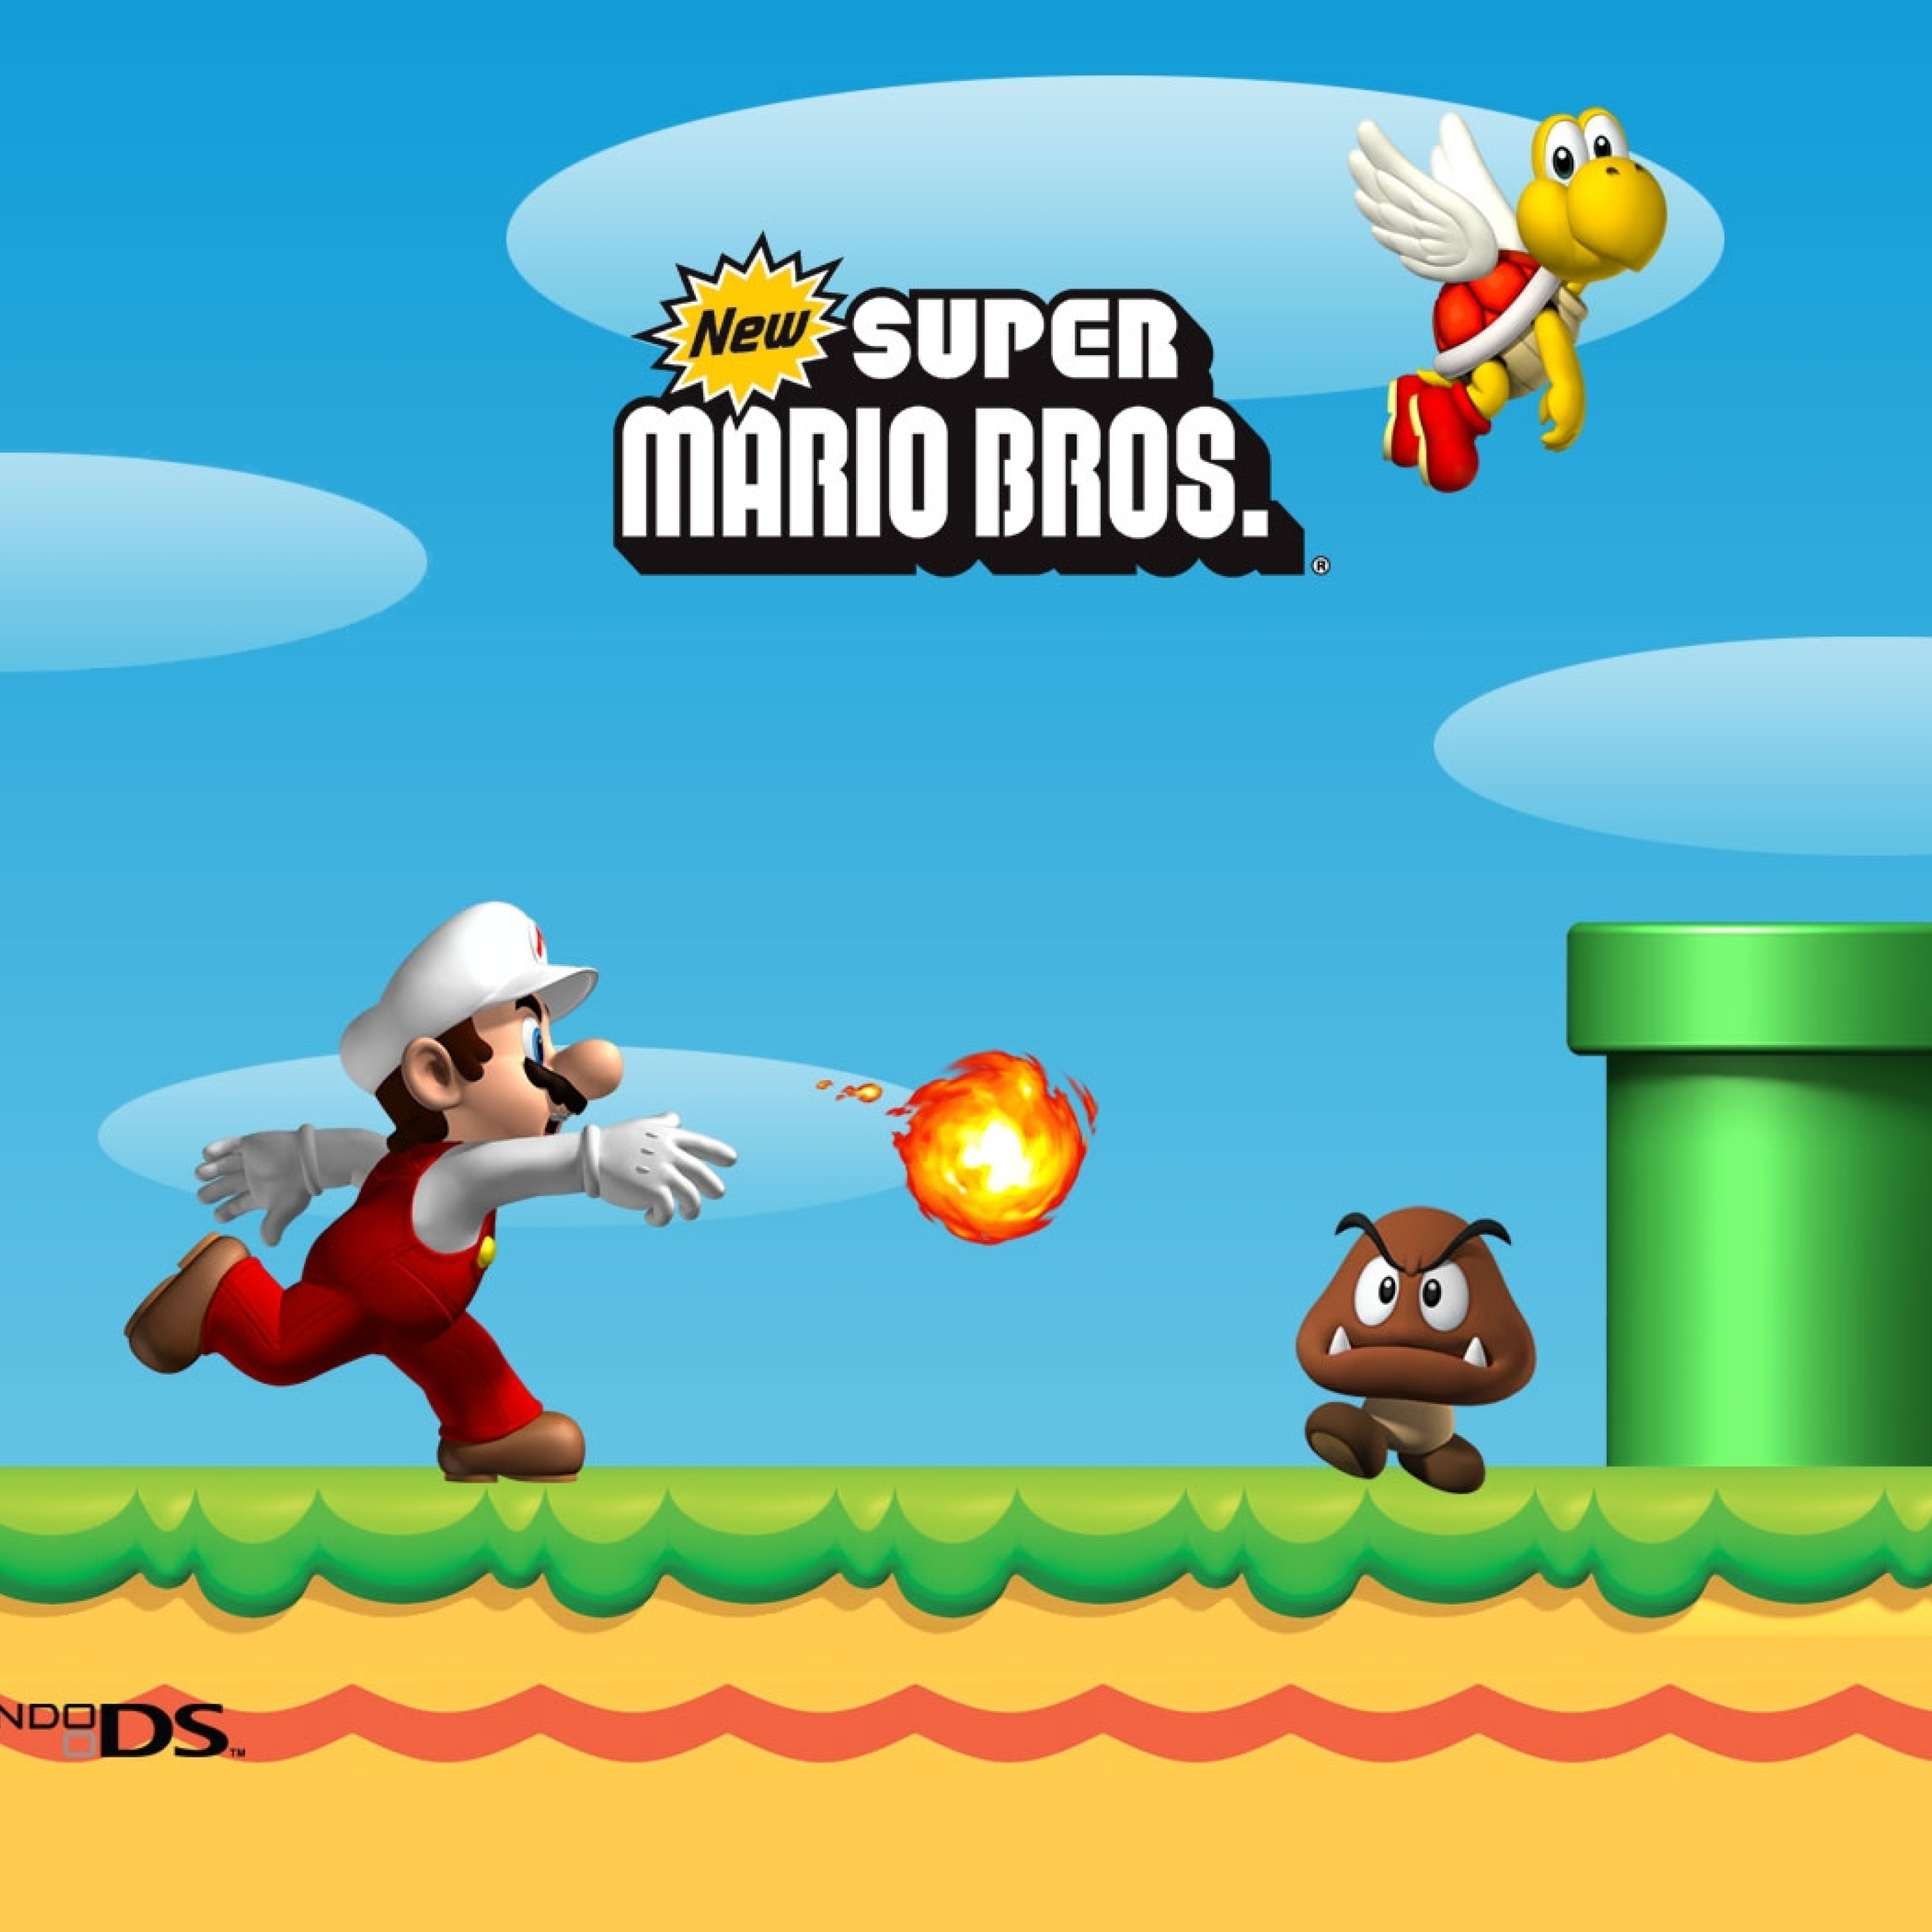 Mario bros snes. Игры super Mario Bros. New super Mario Bros. Игра. Игра Марио супер Марио БРОС. Марио 1985.